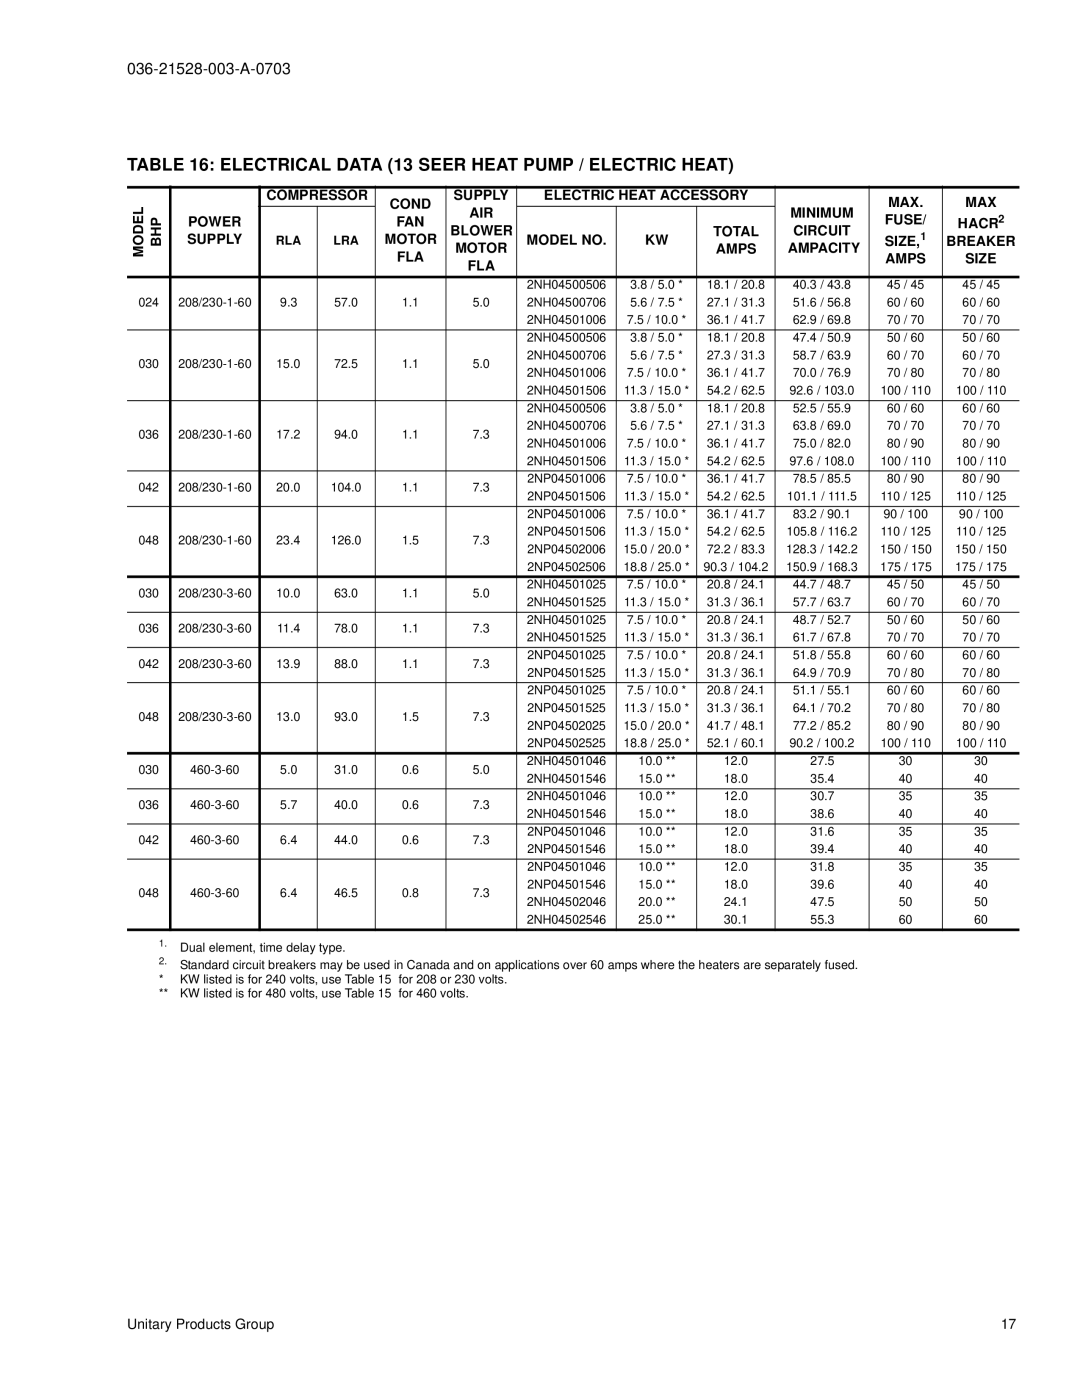 York BHP024 manual Electrical Data 13 Seer Heat Pump / Electric Heat, Rla Lra 